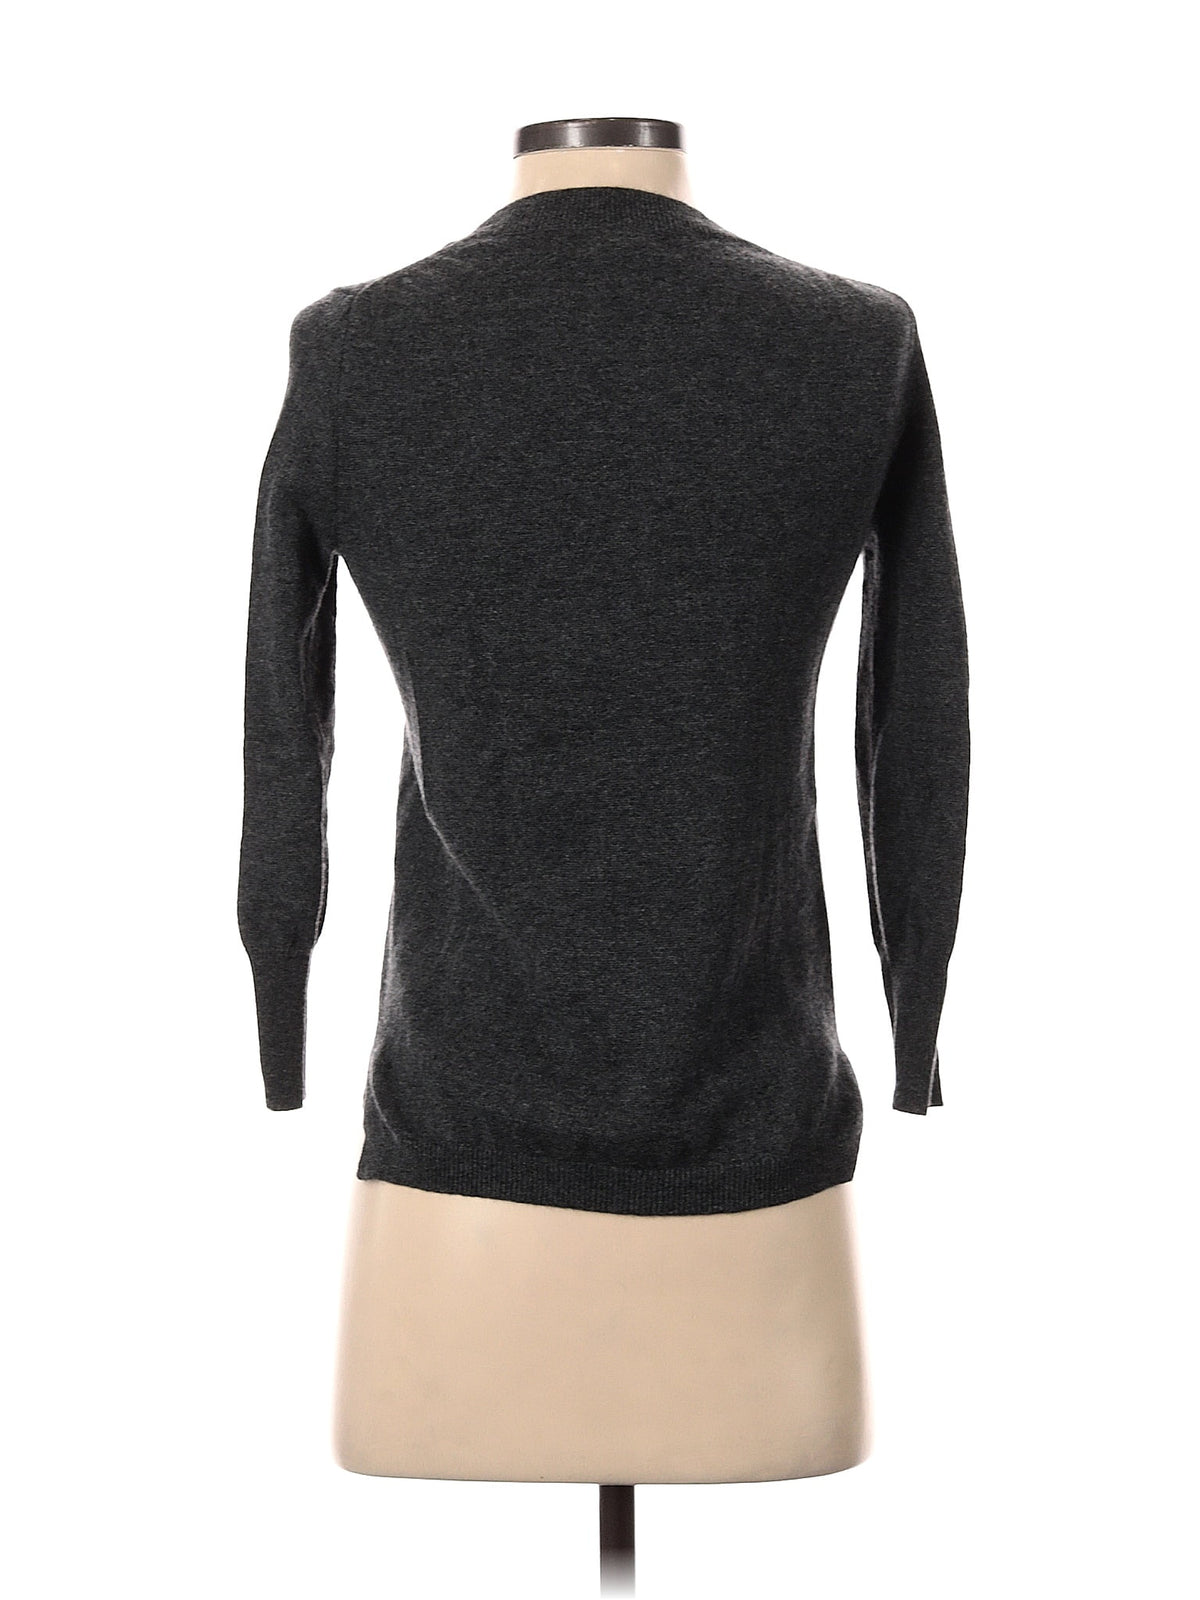 Cashmere Pullover Sweater size - XXS